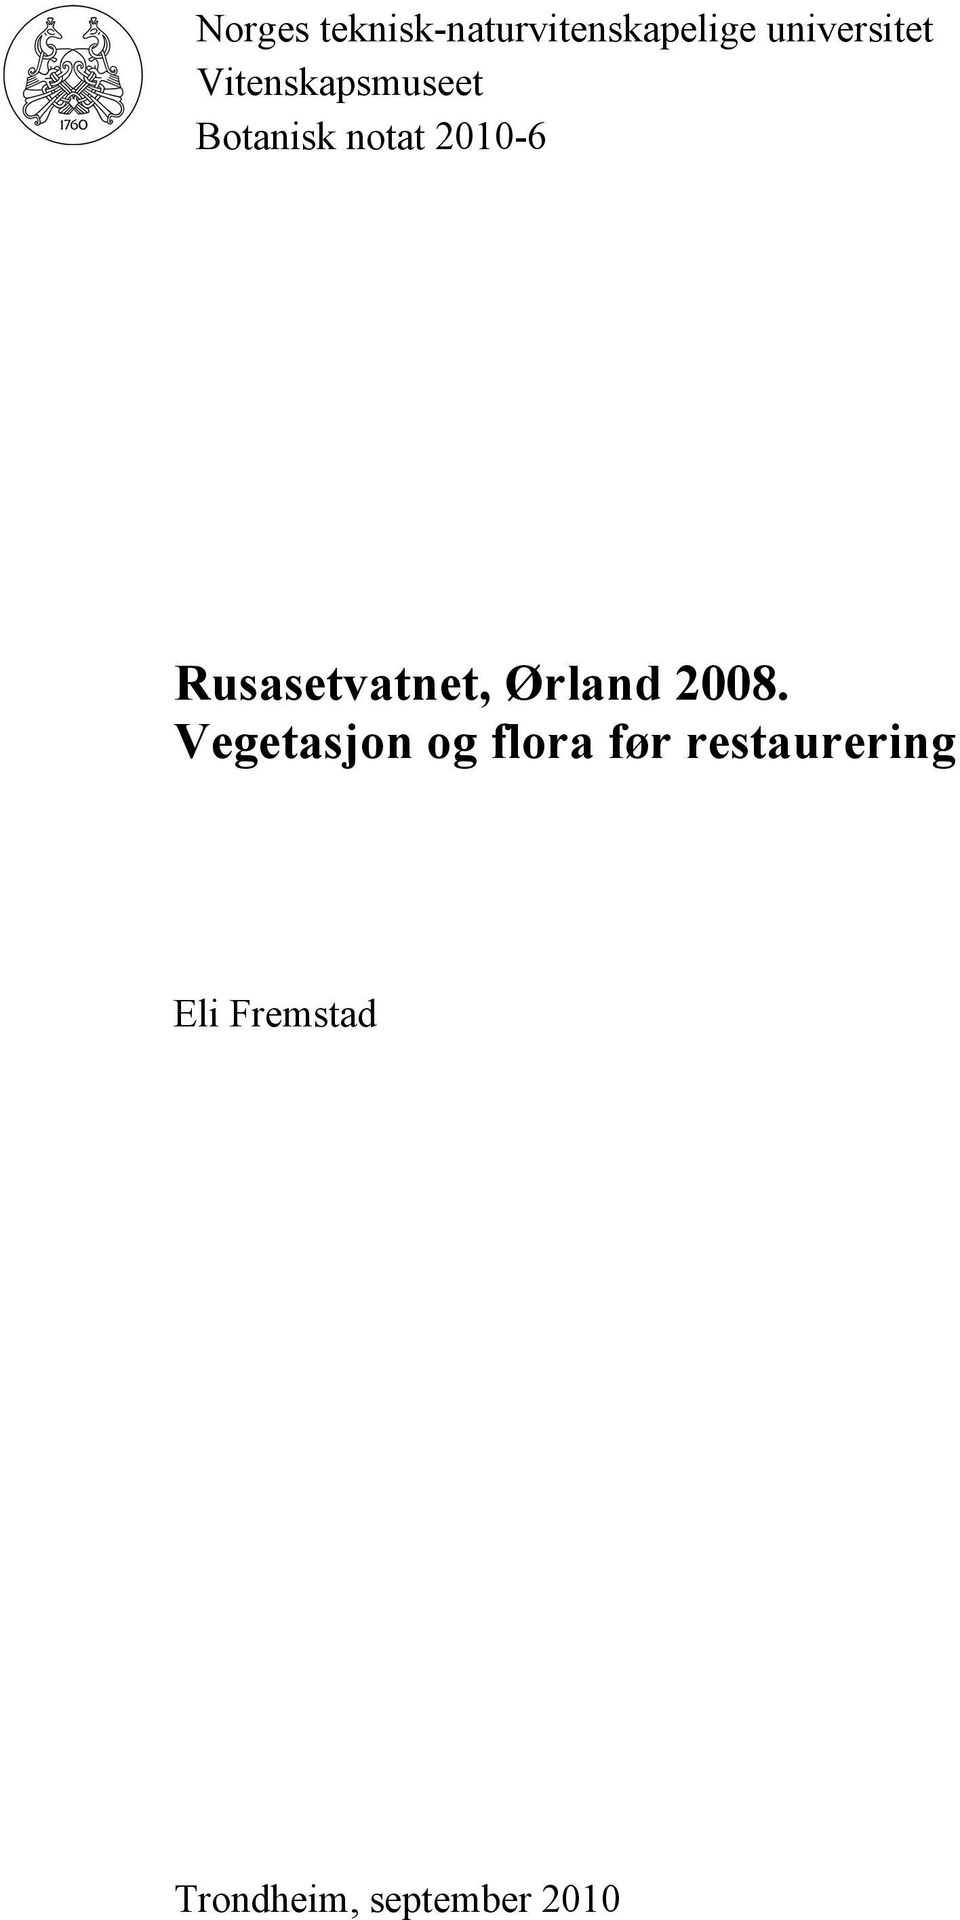 Rusasetvatnet, Ørland 2008.